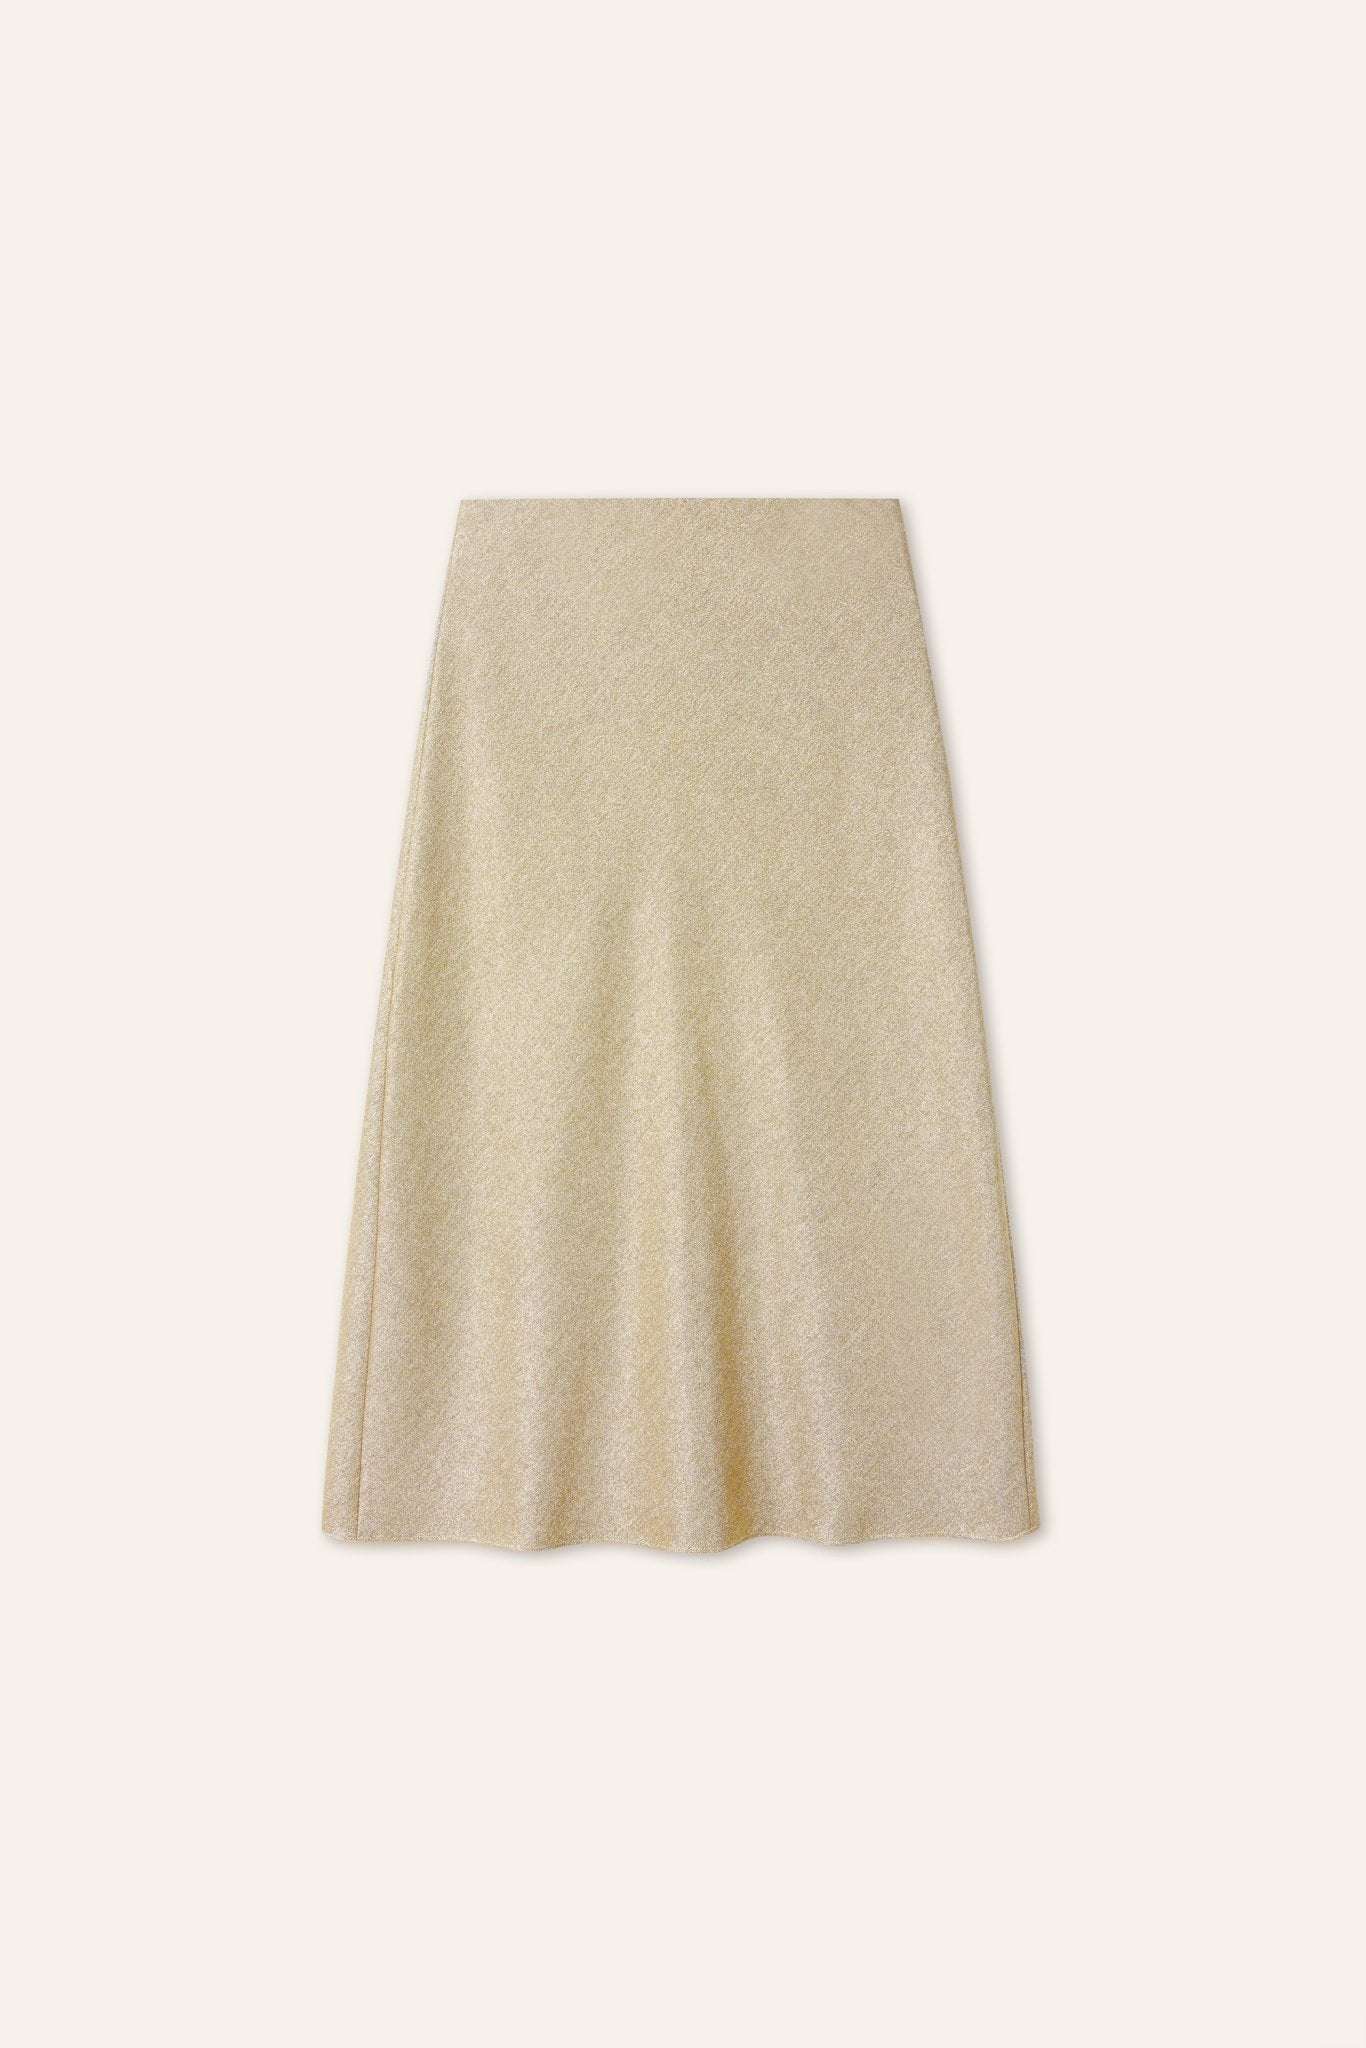 TOKYO GLITTER mid skirt (Gold) - STELLAM